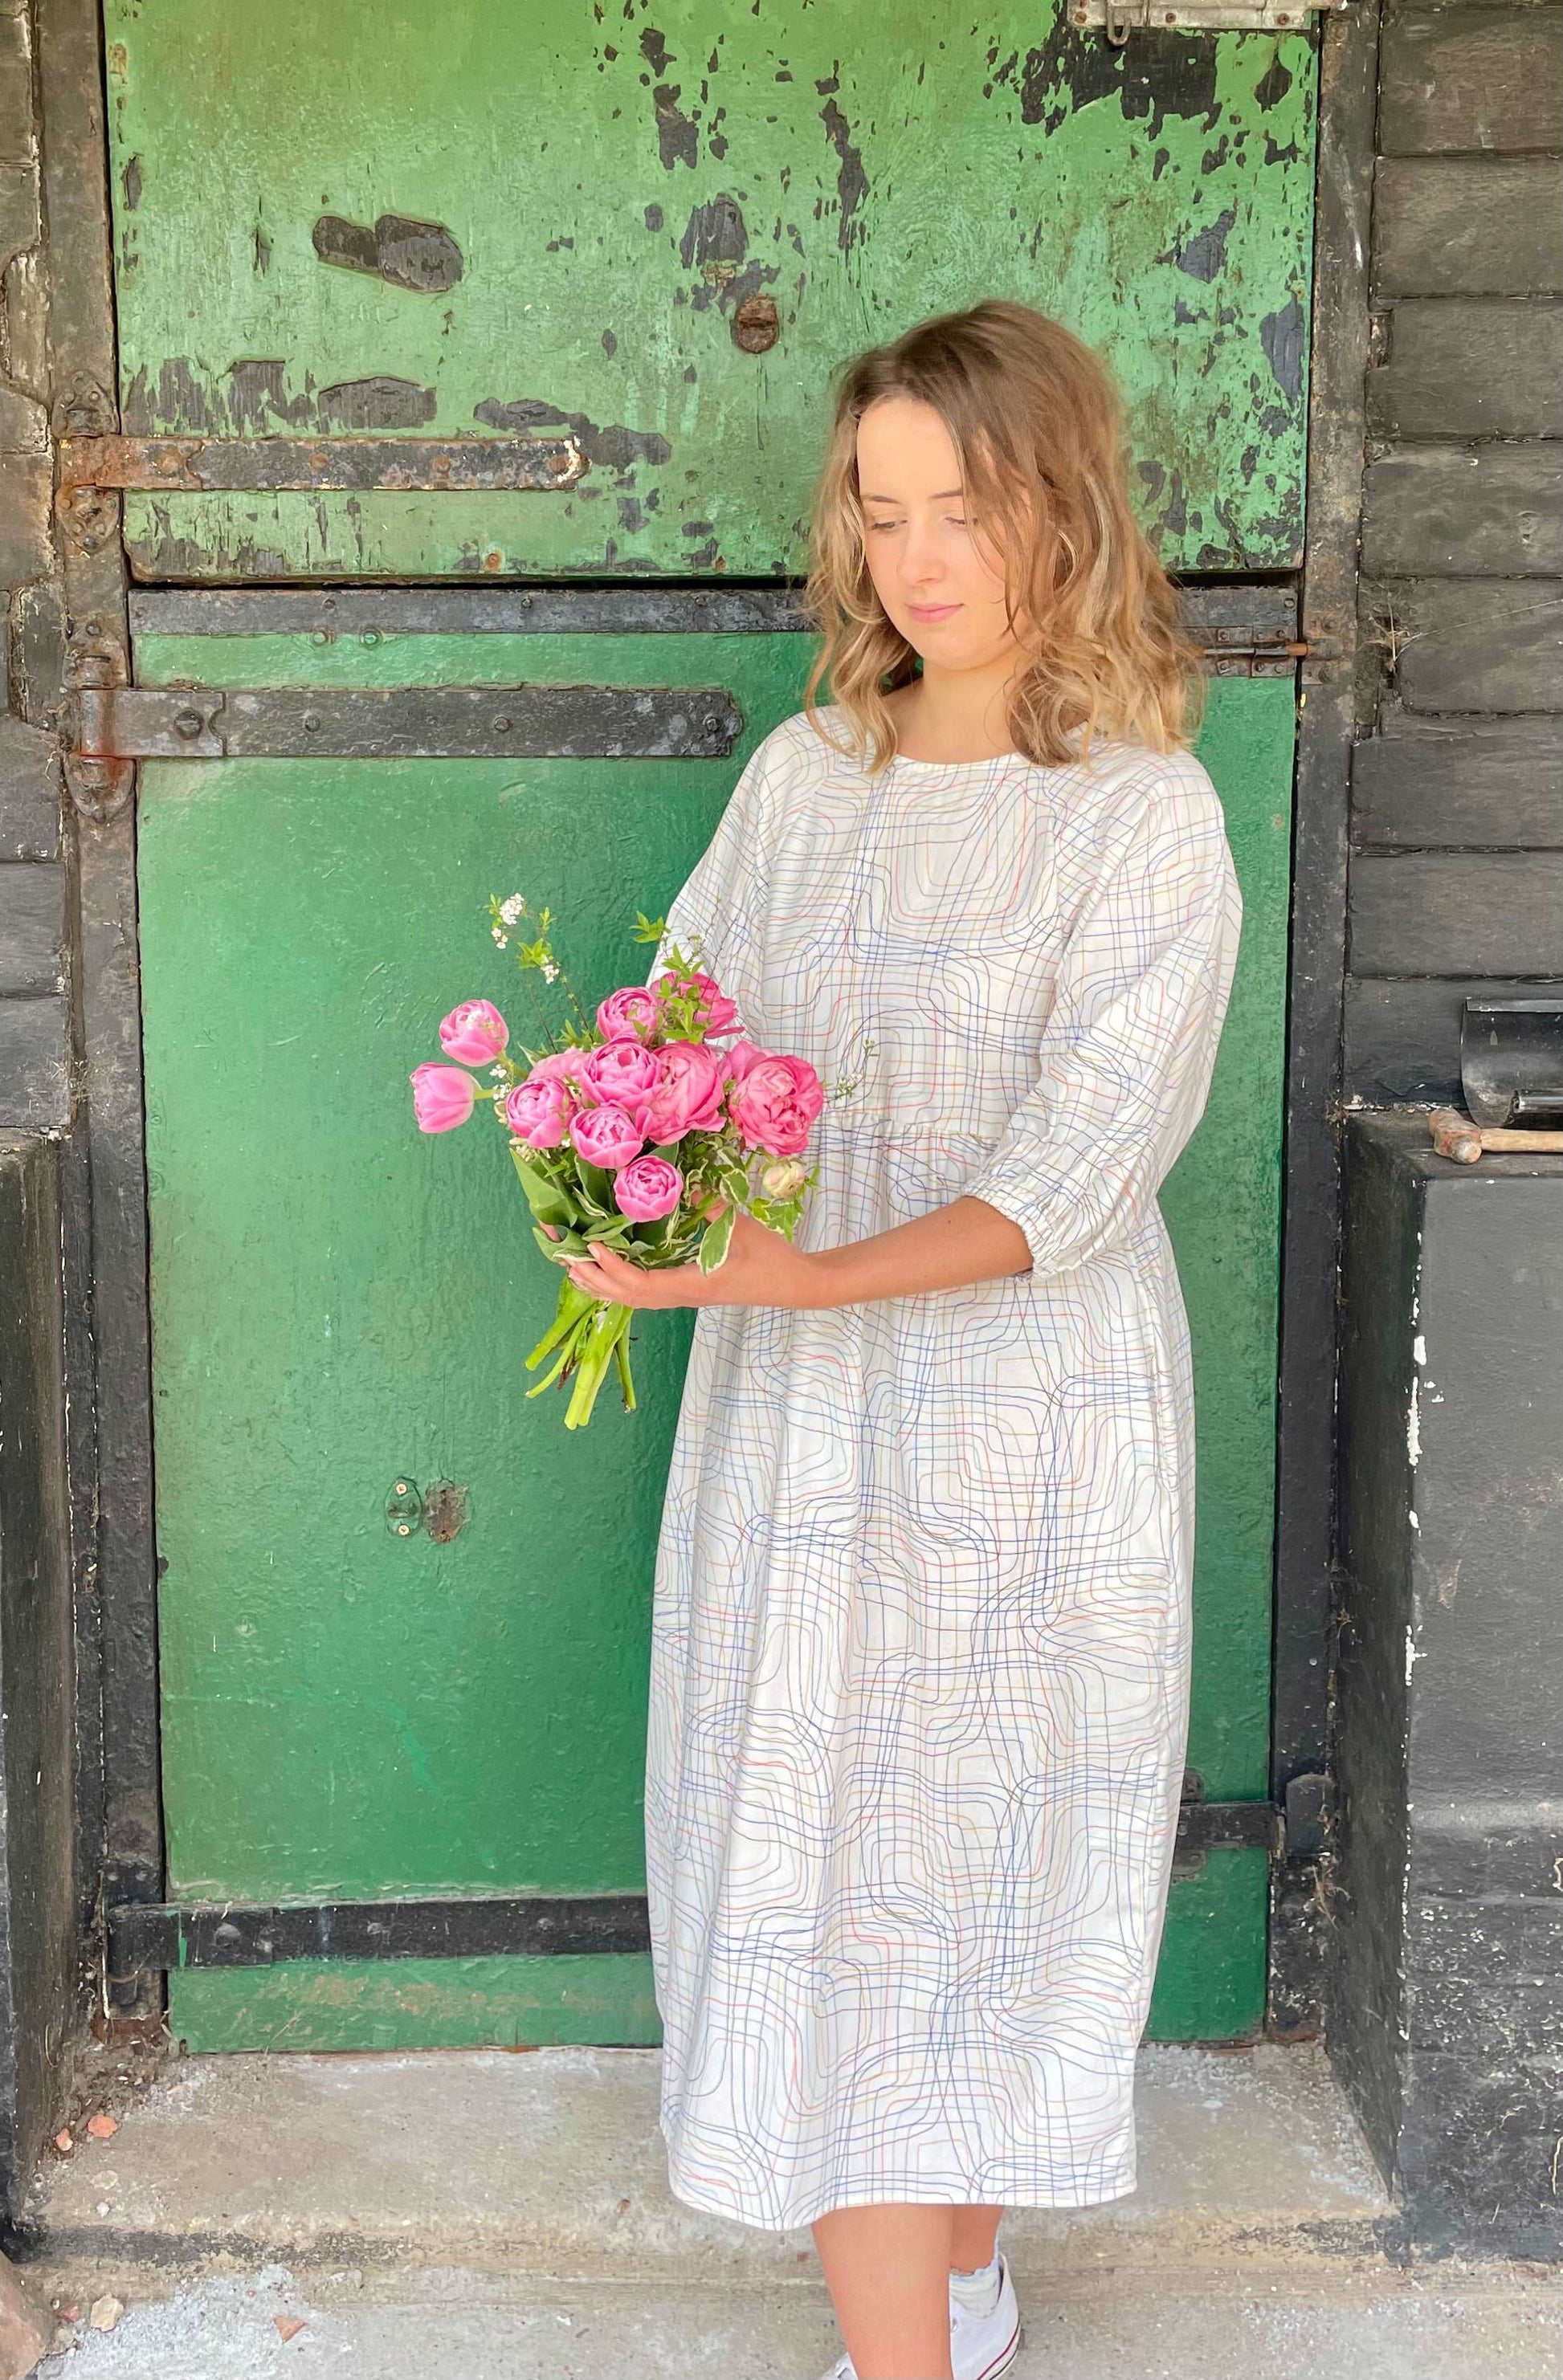 model wearing cream line patterned dress holding flowers